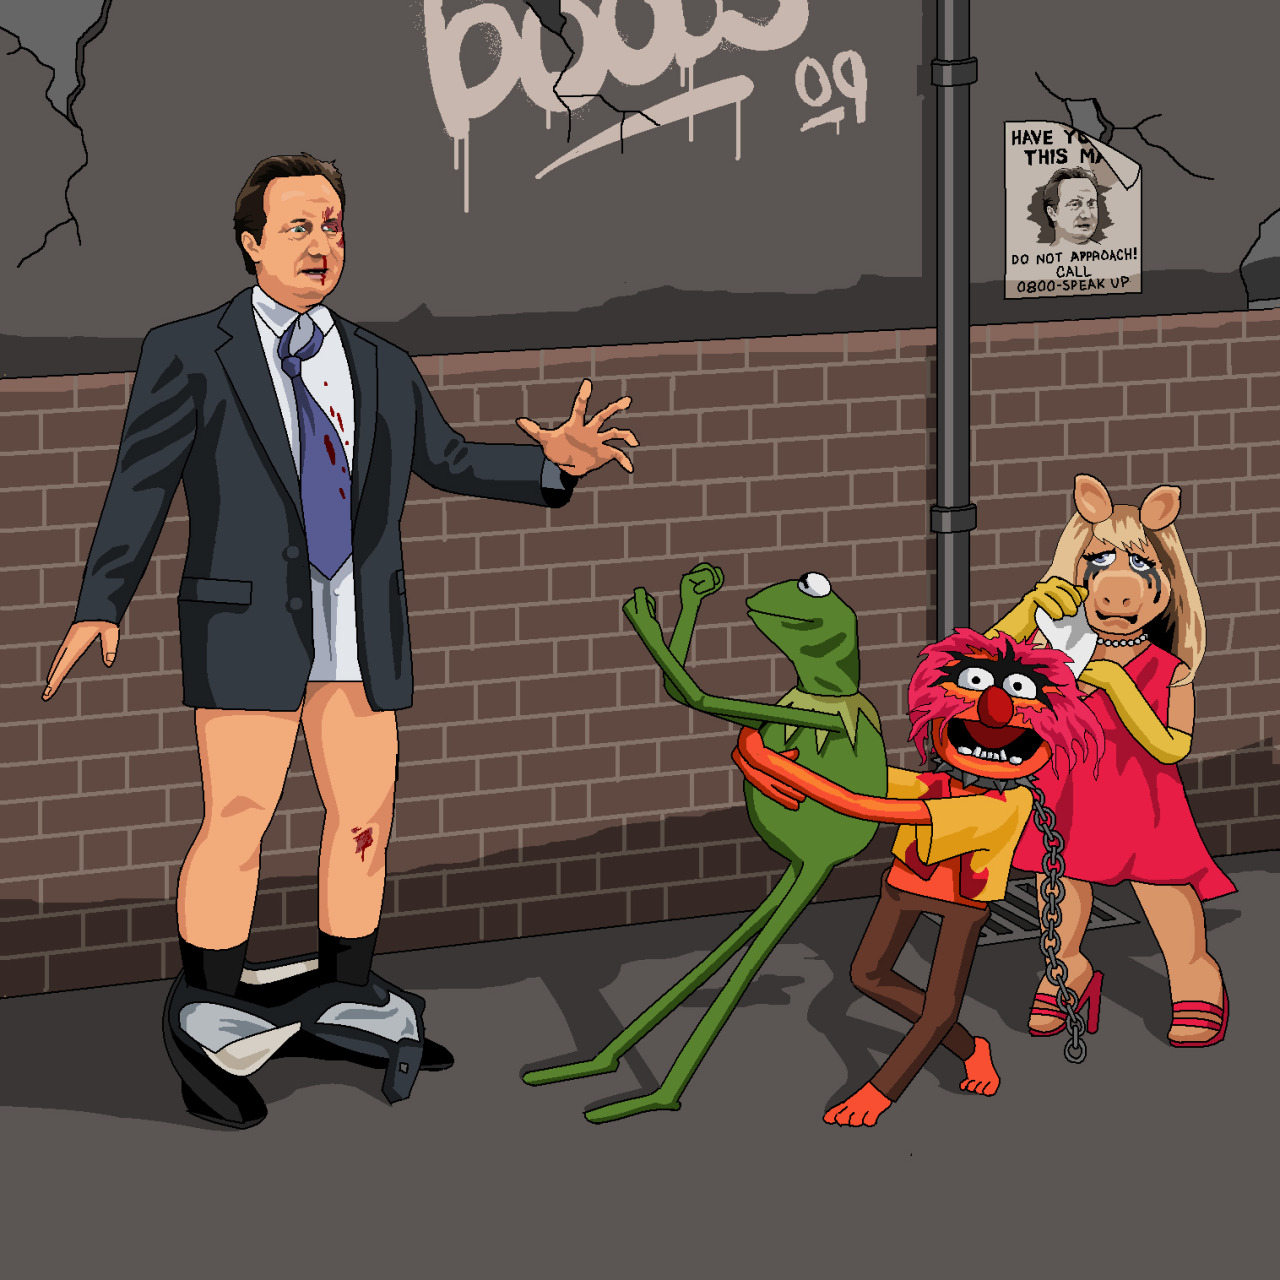 David-Cameron.jpg